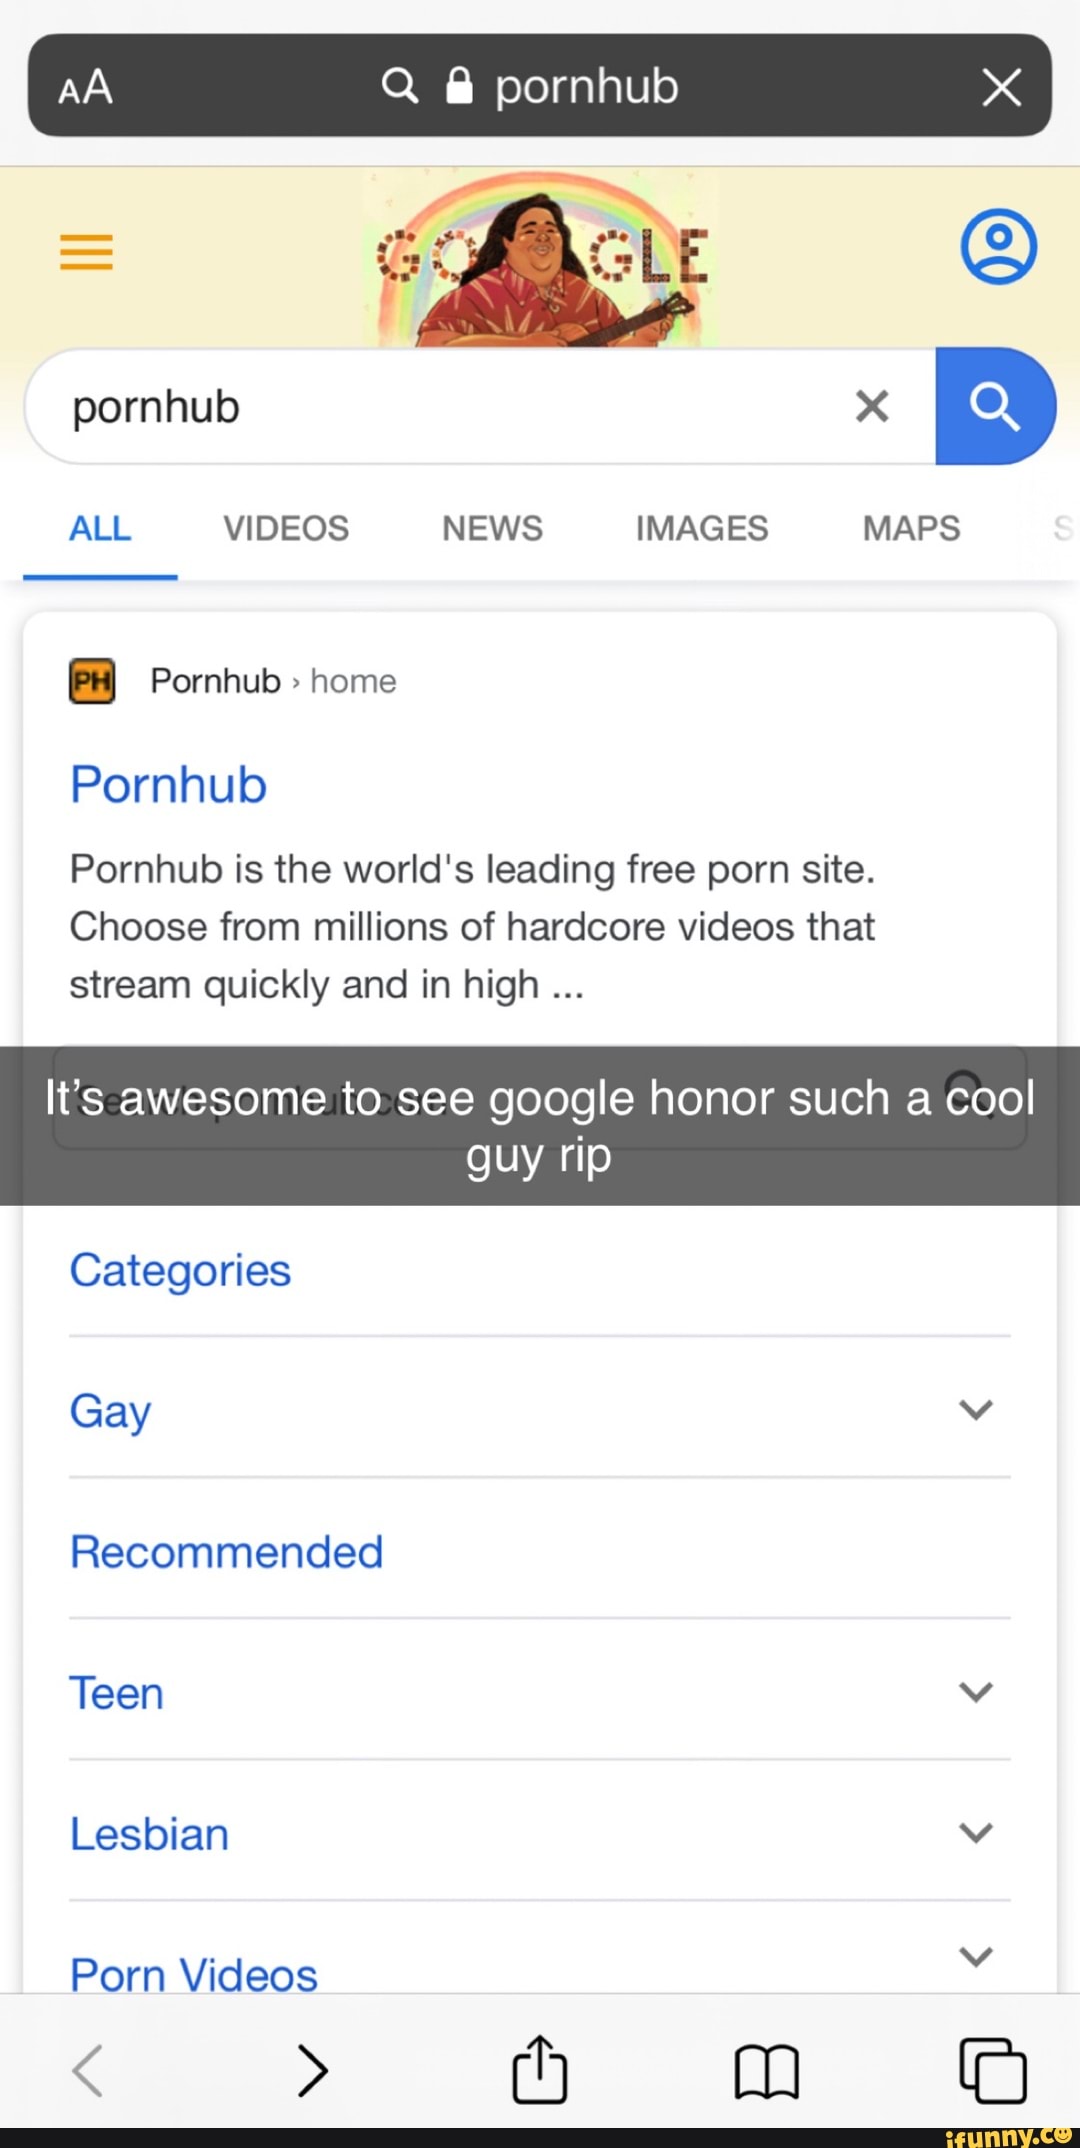 gay porn hub categories